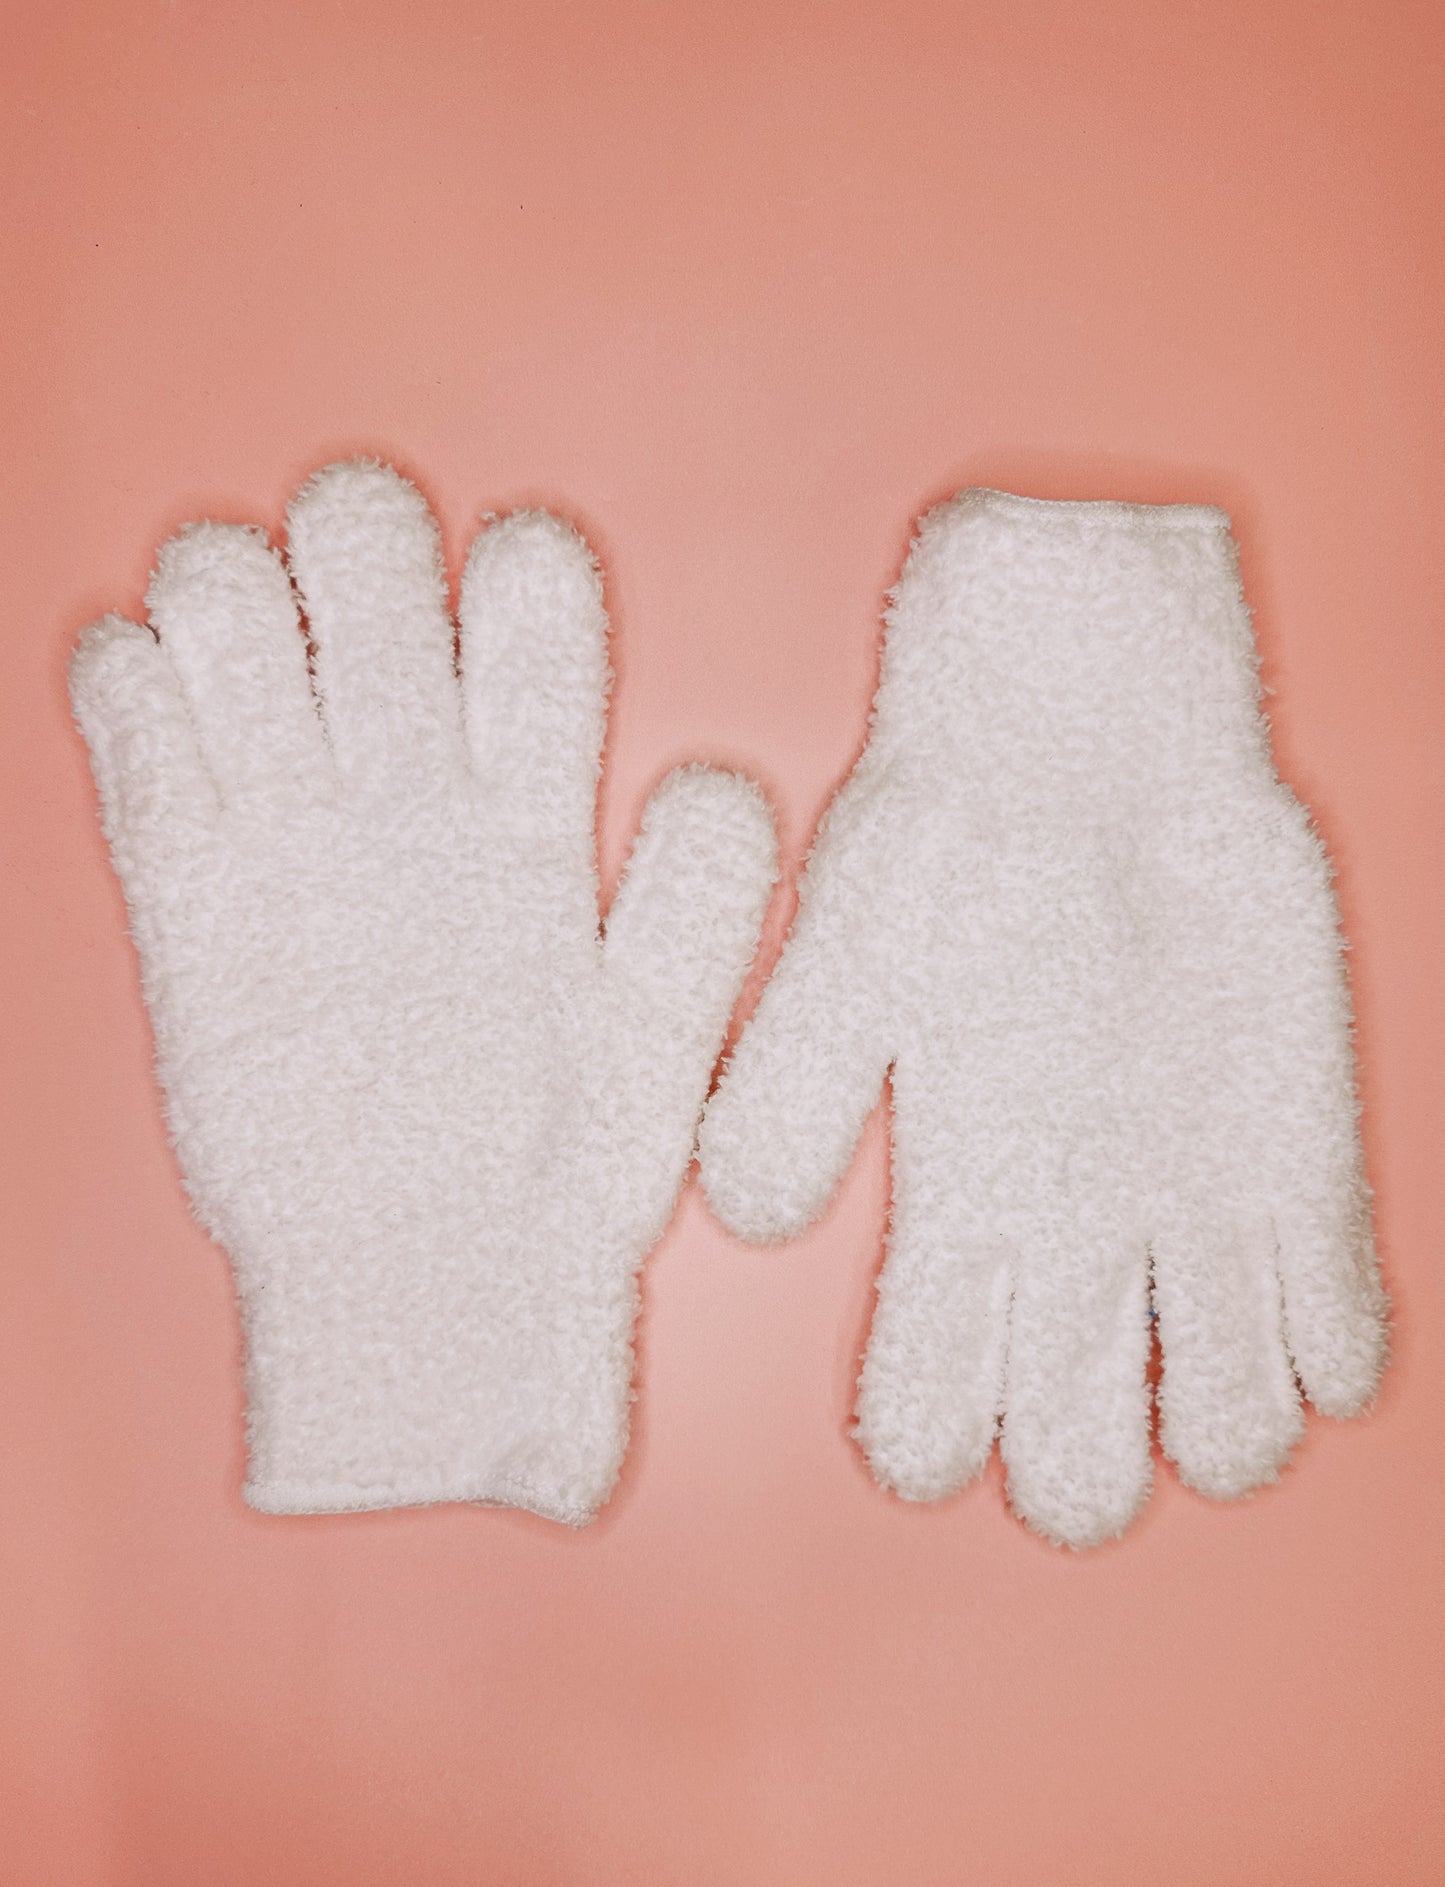 Leaf Polishing Gloves